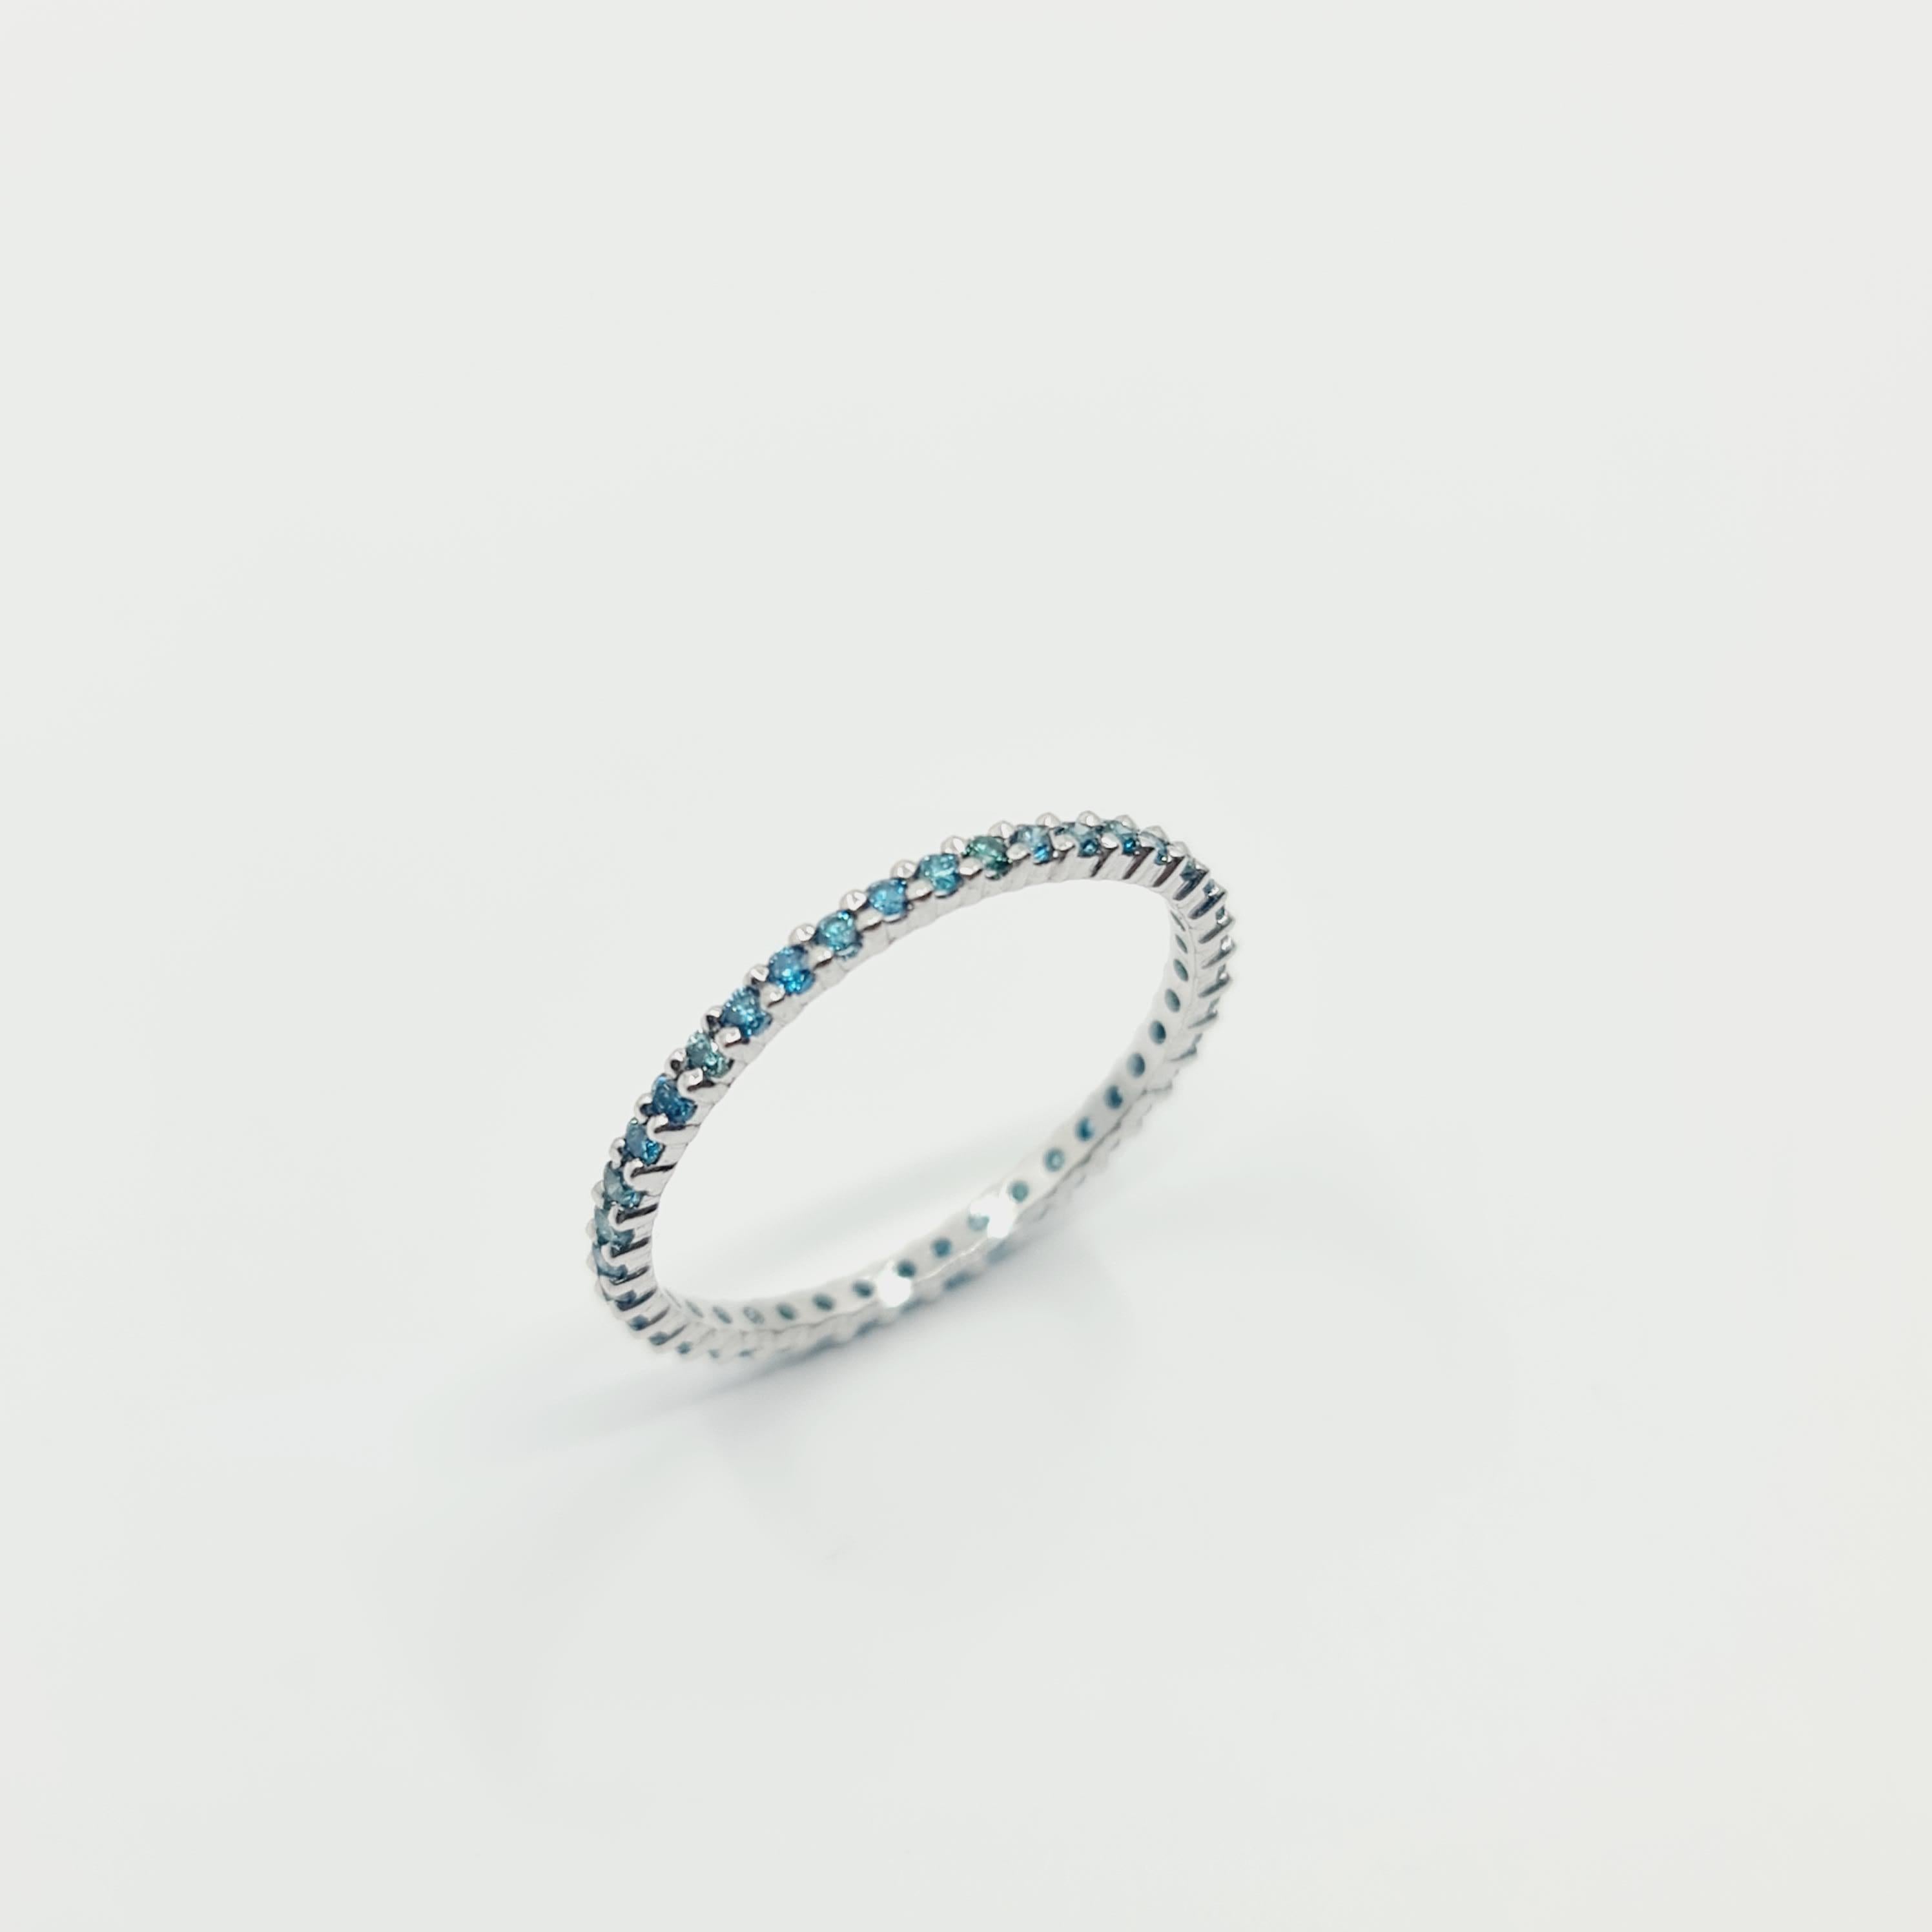 Brilliant Cut Blue Diamonds Eternity Ring 0.36 Carat VS Fancy Blue / Blue-Green Treated For Sale